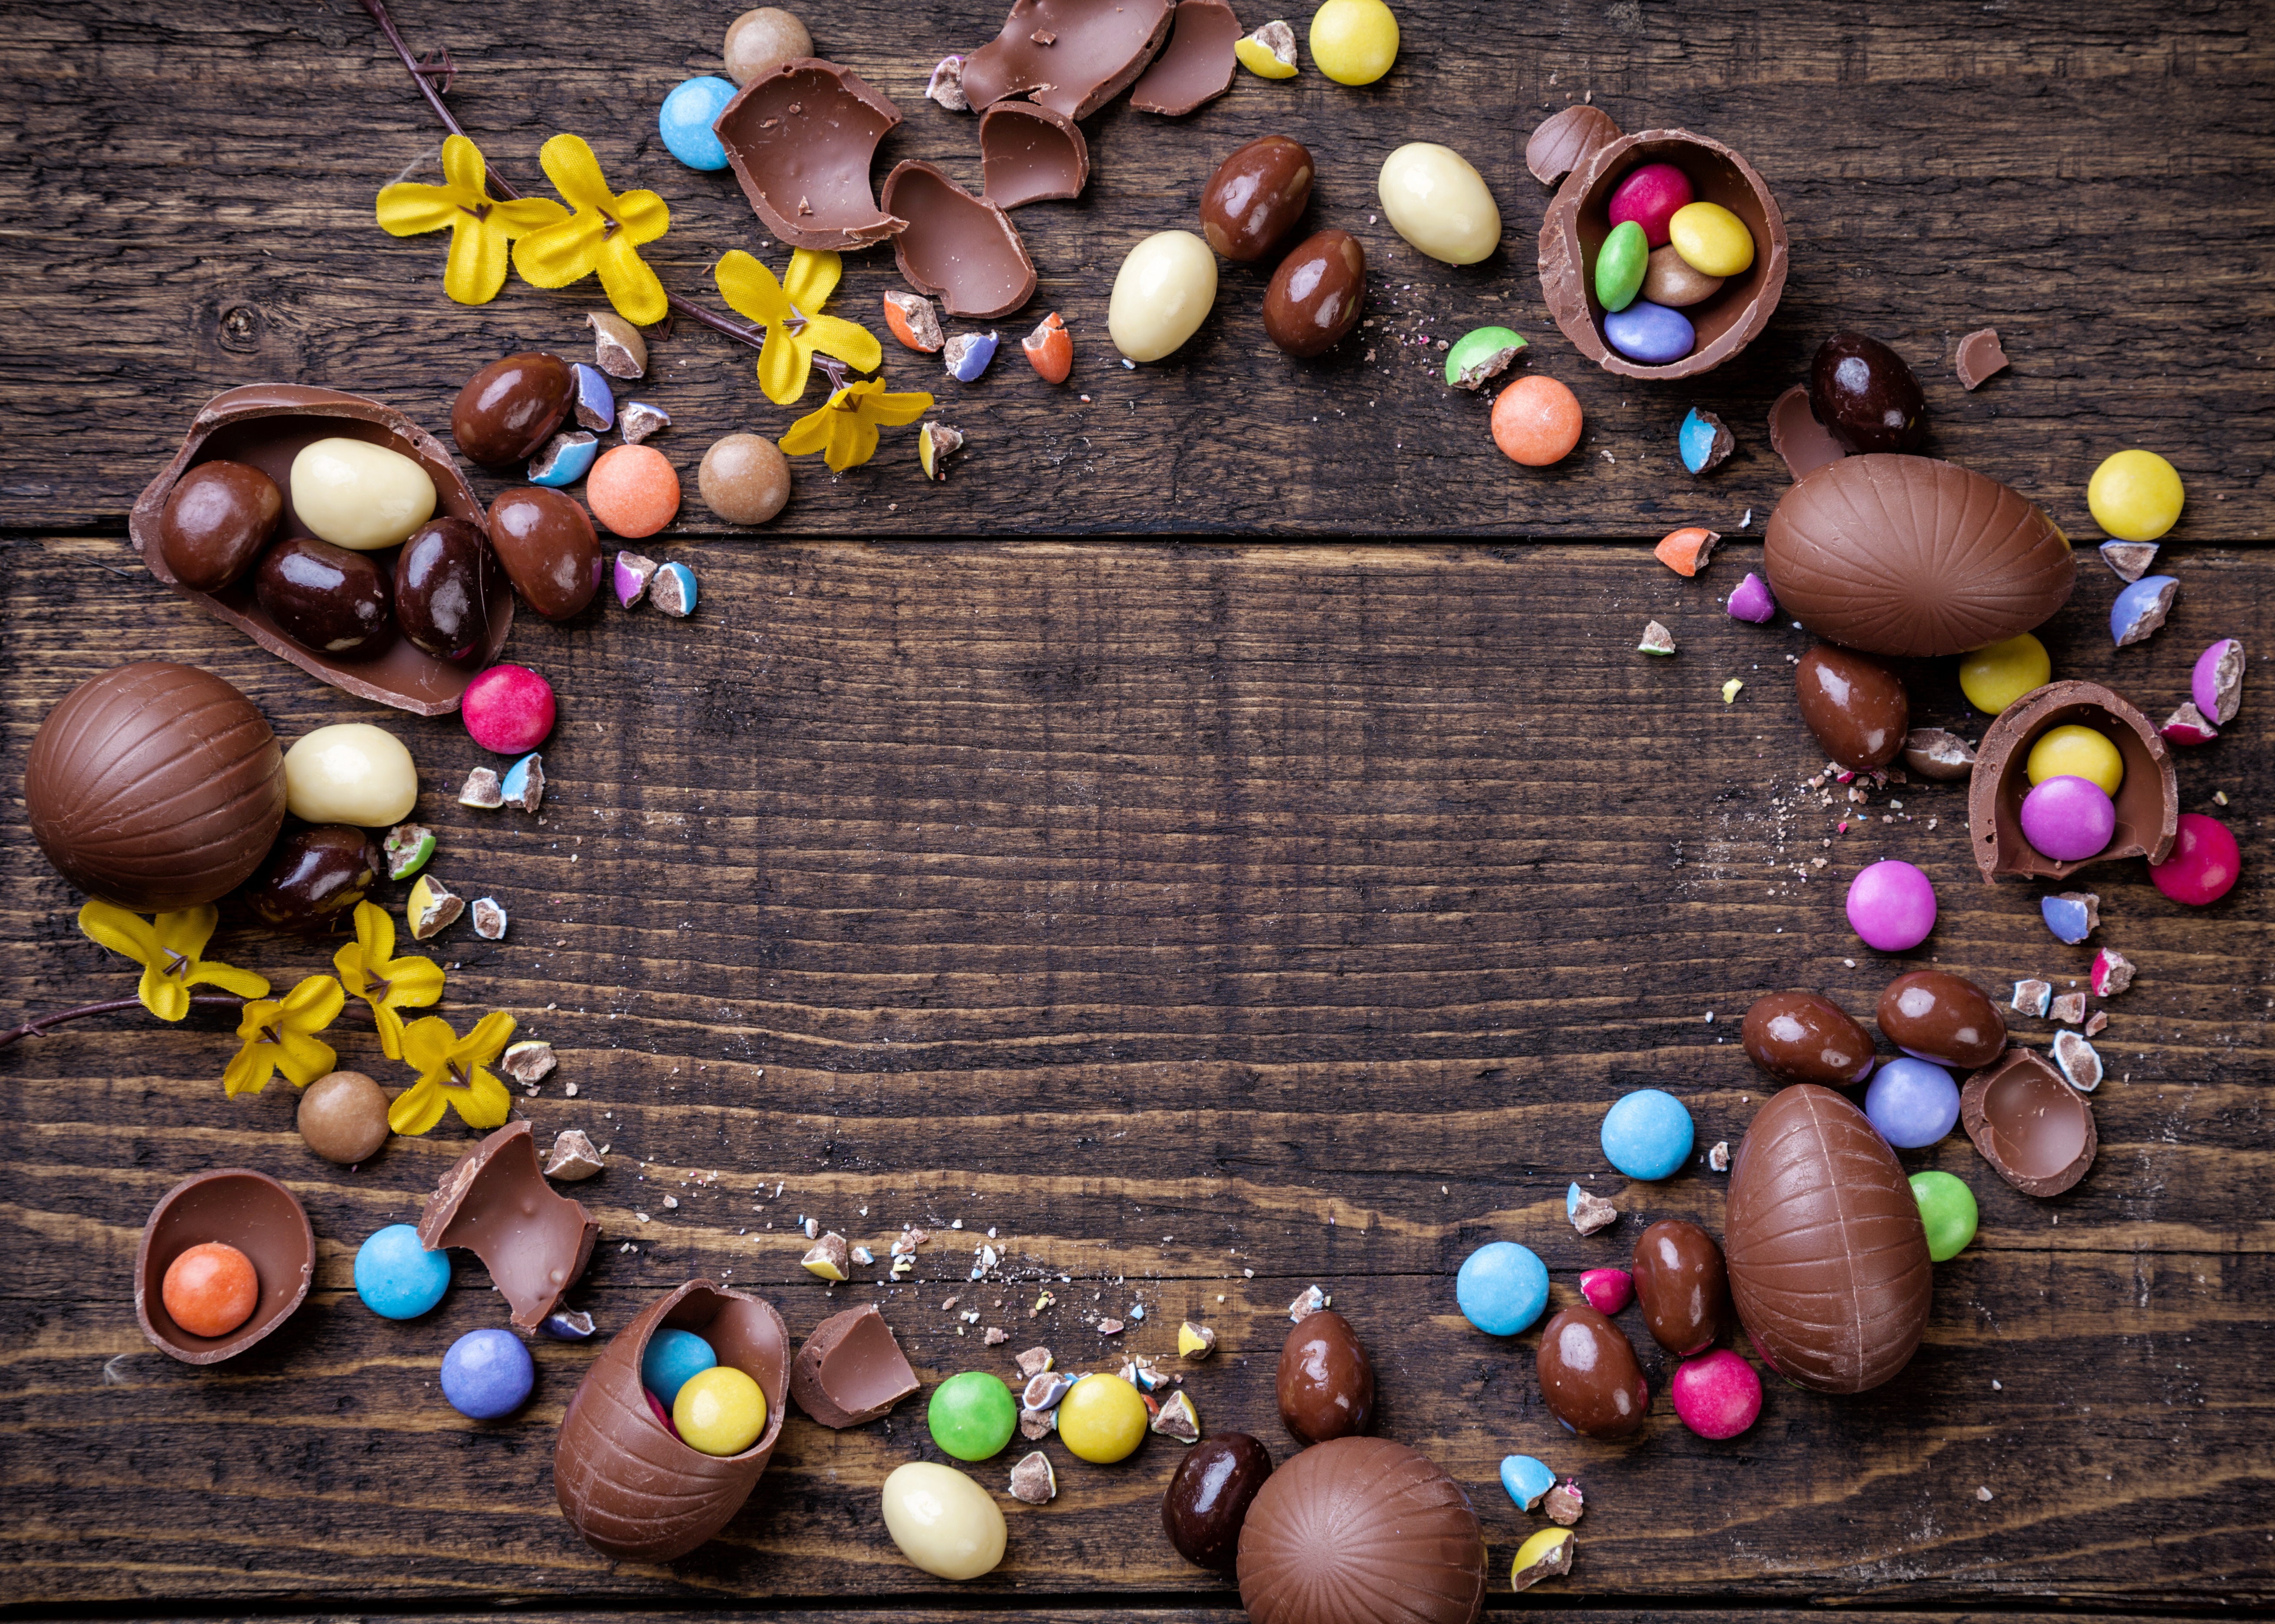 Descarga gratis la imagen Pascua, Chocolate, Día Festivo, Caramelo, Bodegón en el escritorio de tu PC